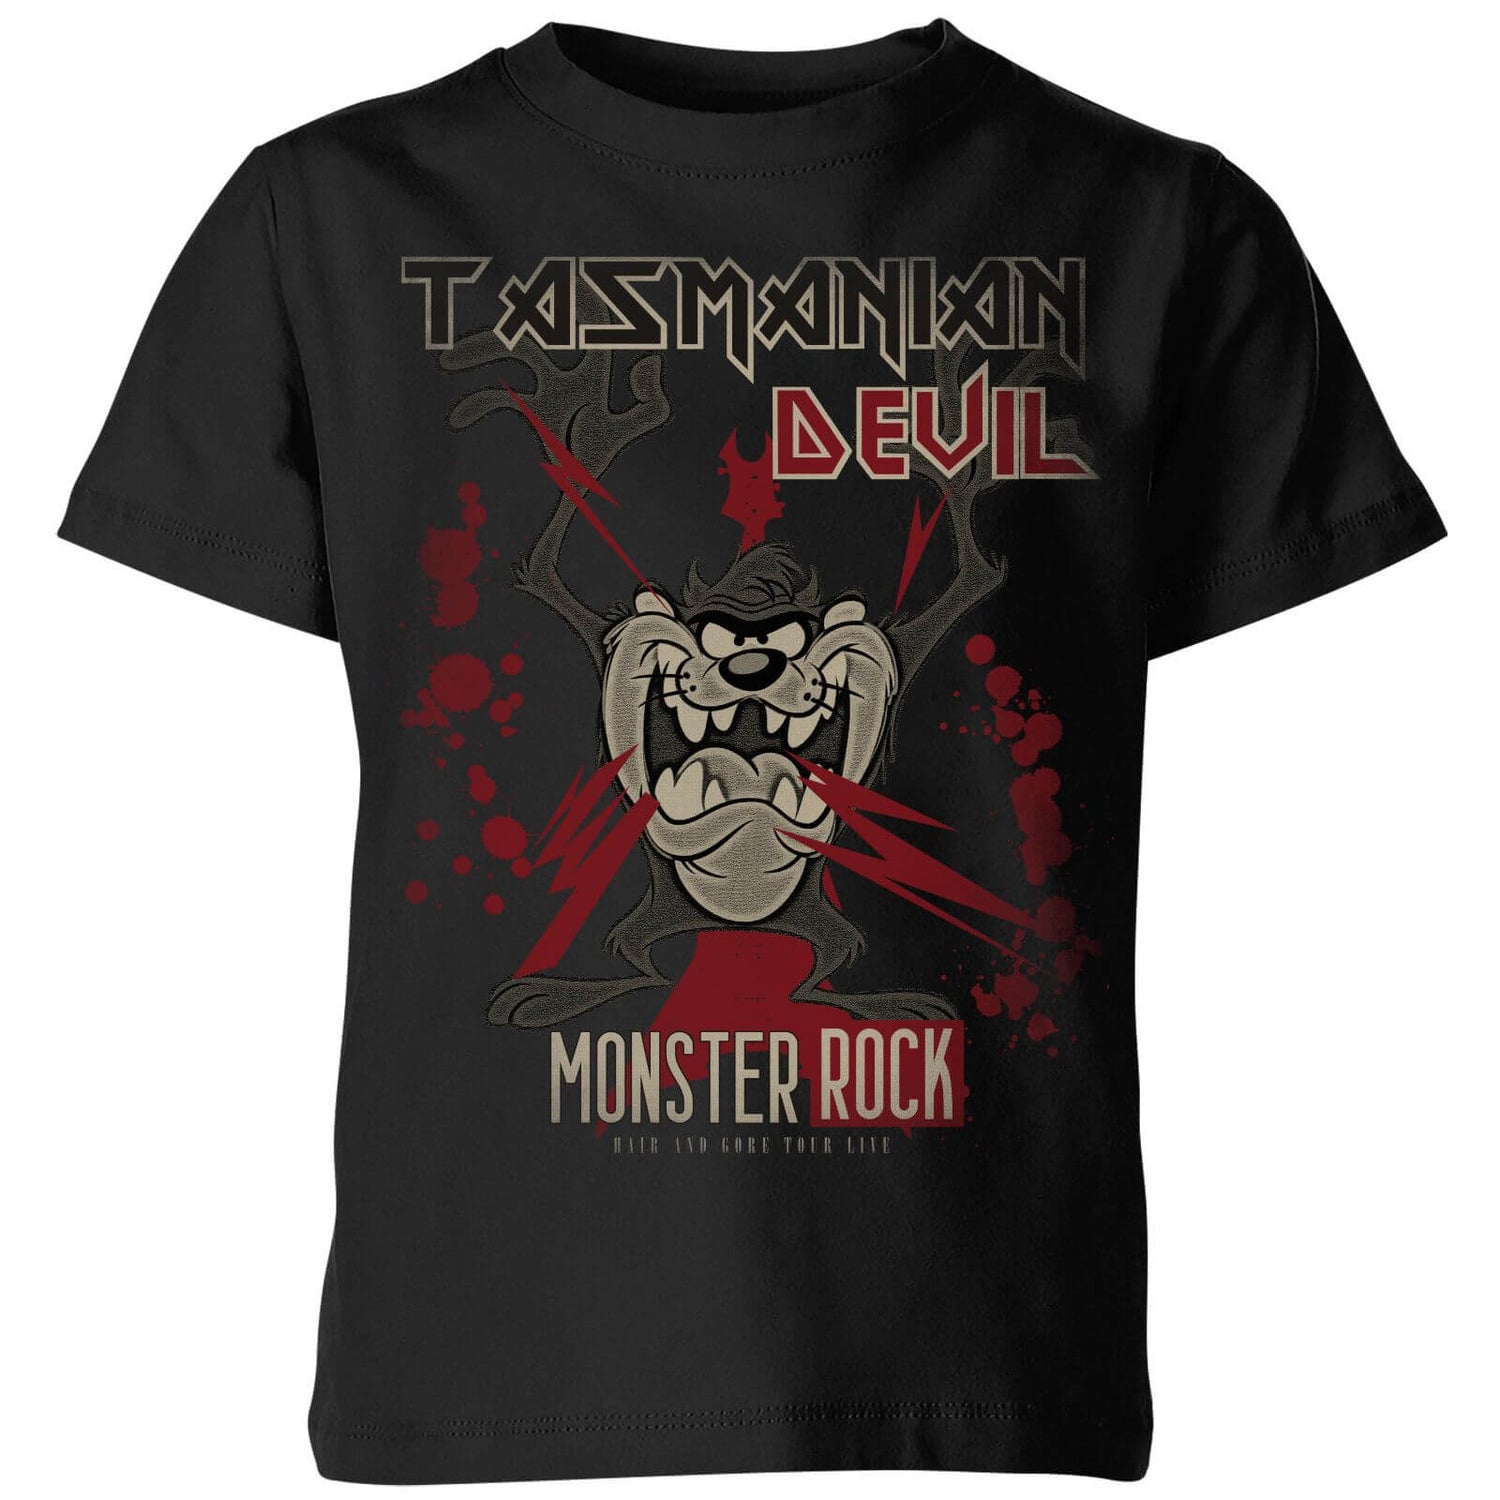 Looney Tunes Homme Tasmanian Devil Monster Rock T-Shirt